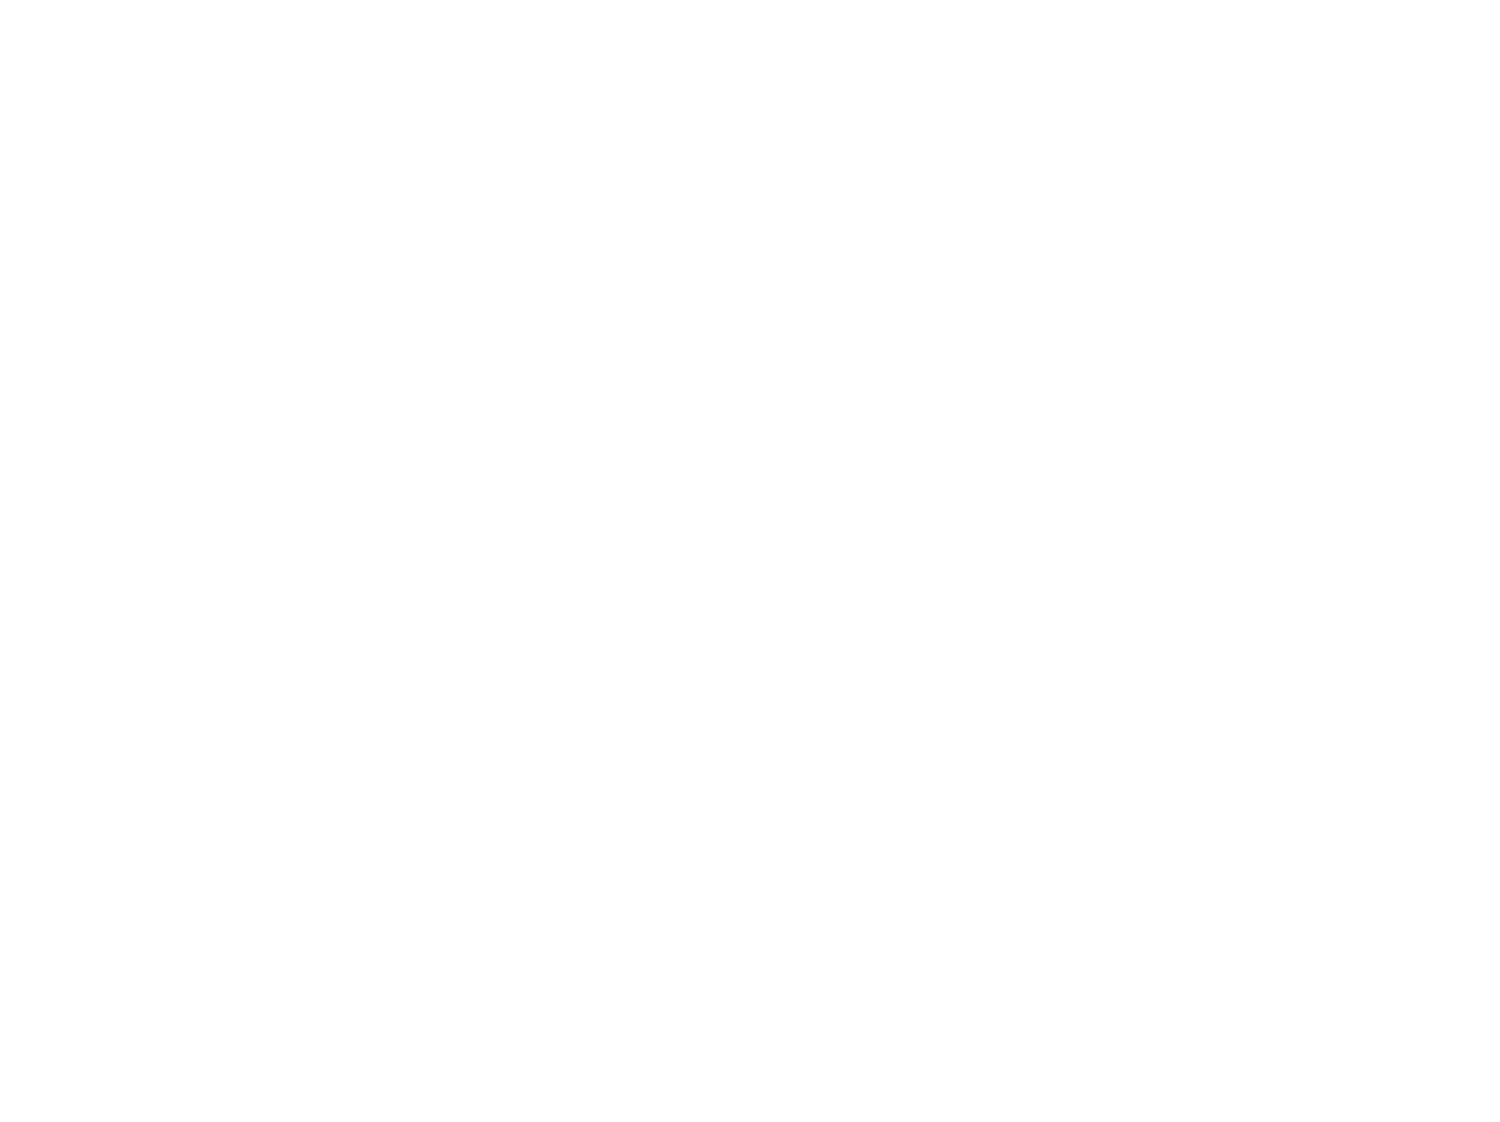 Clyatt.net